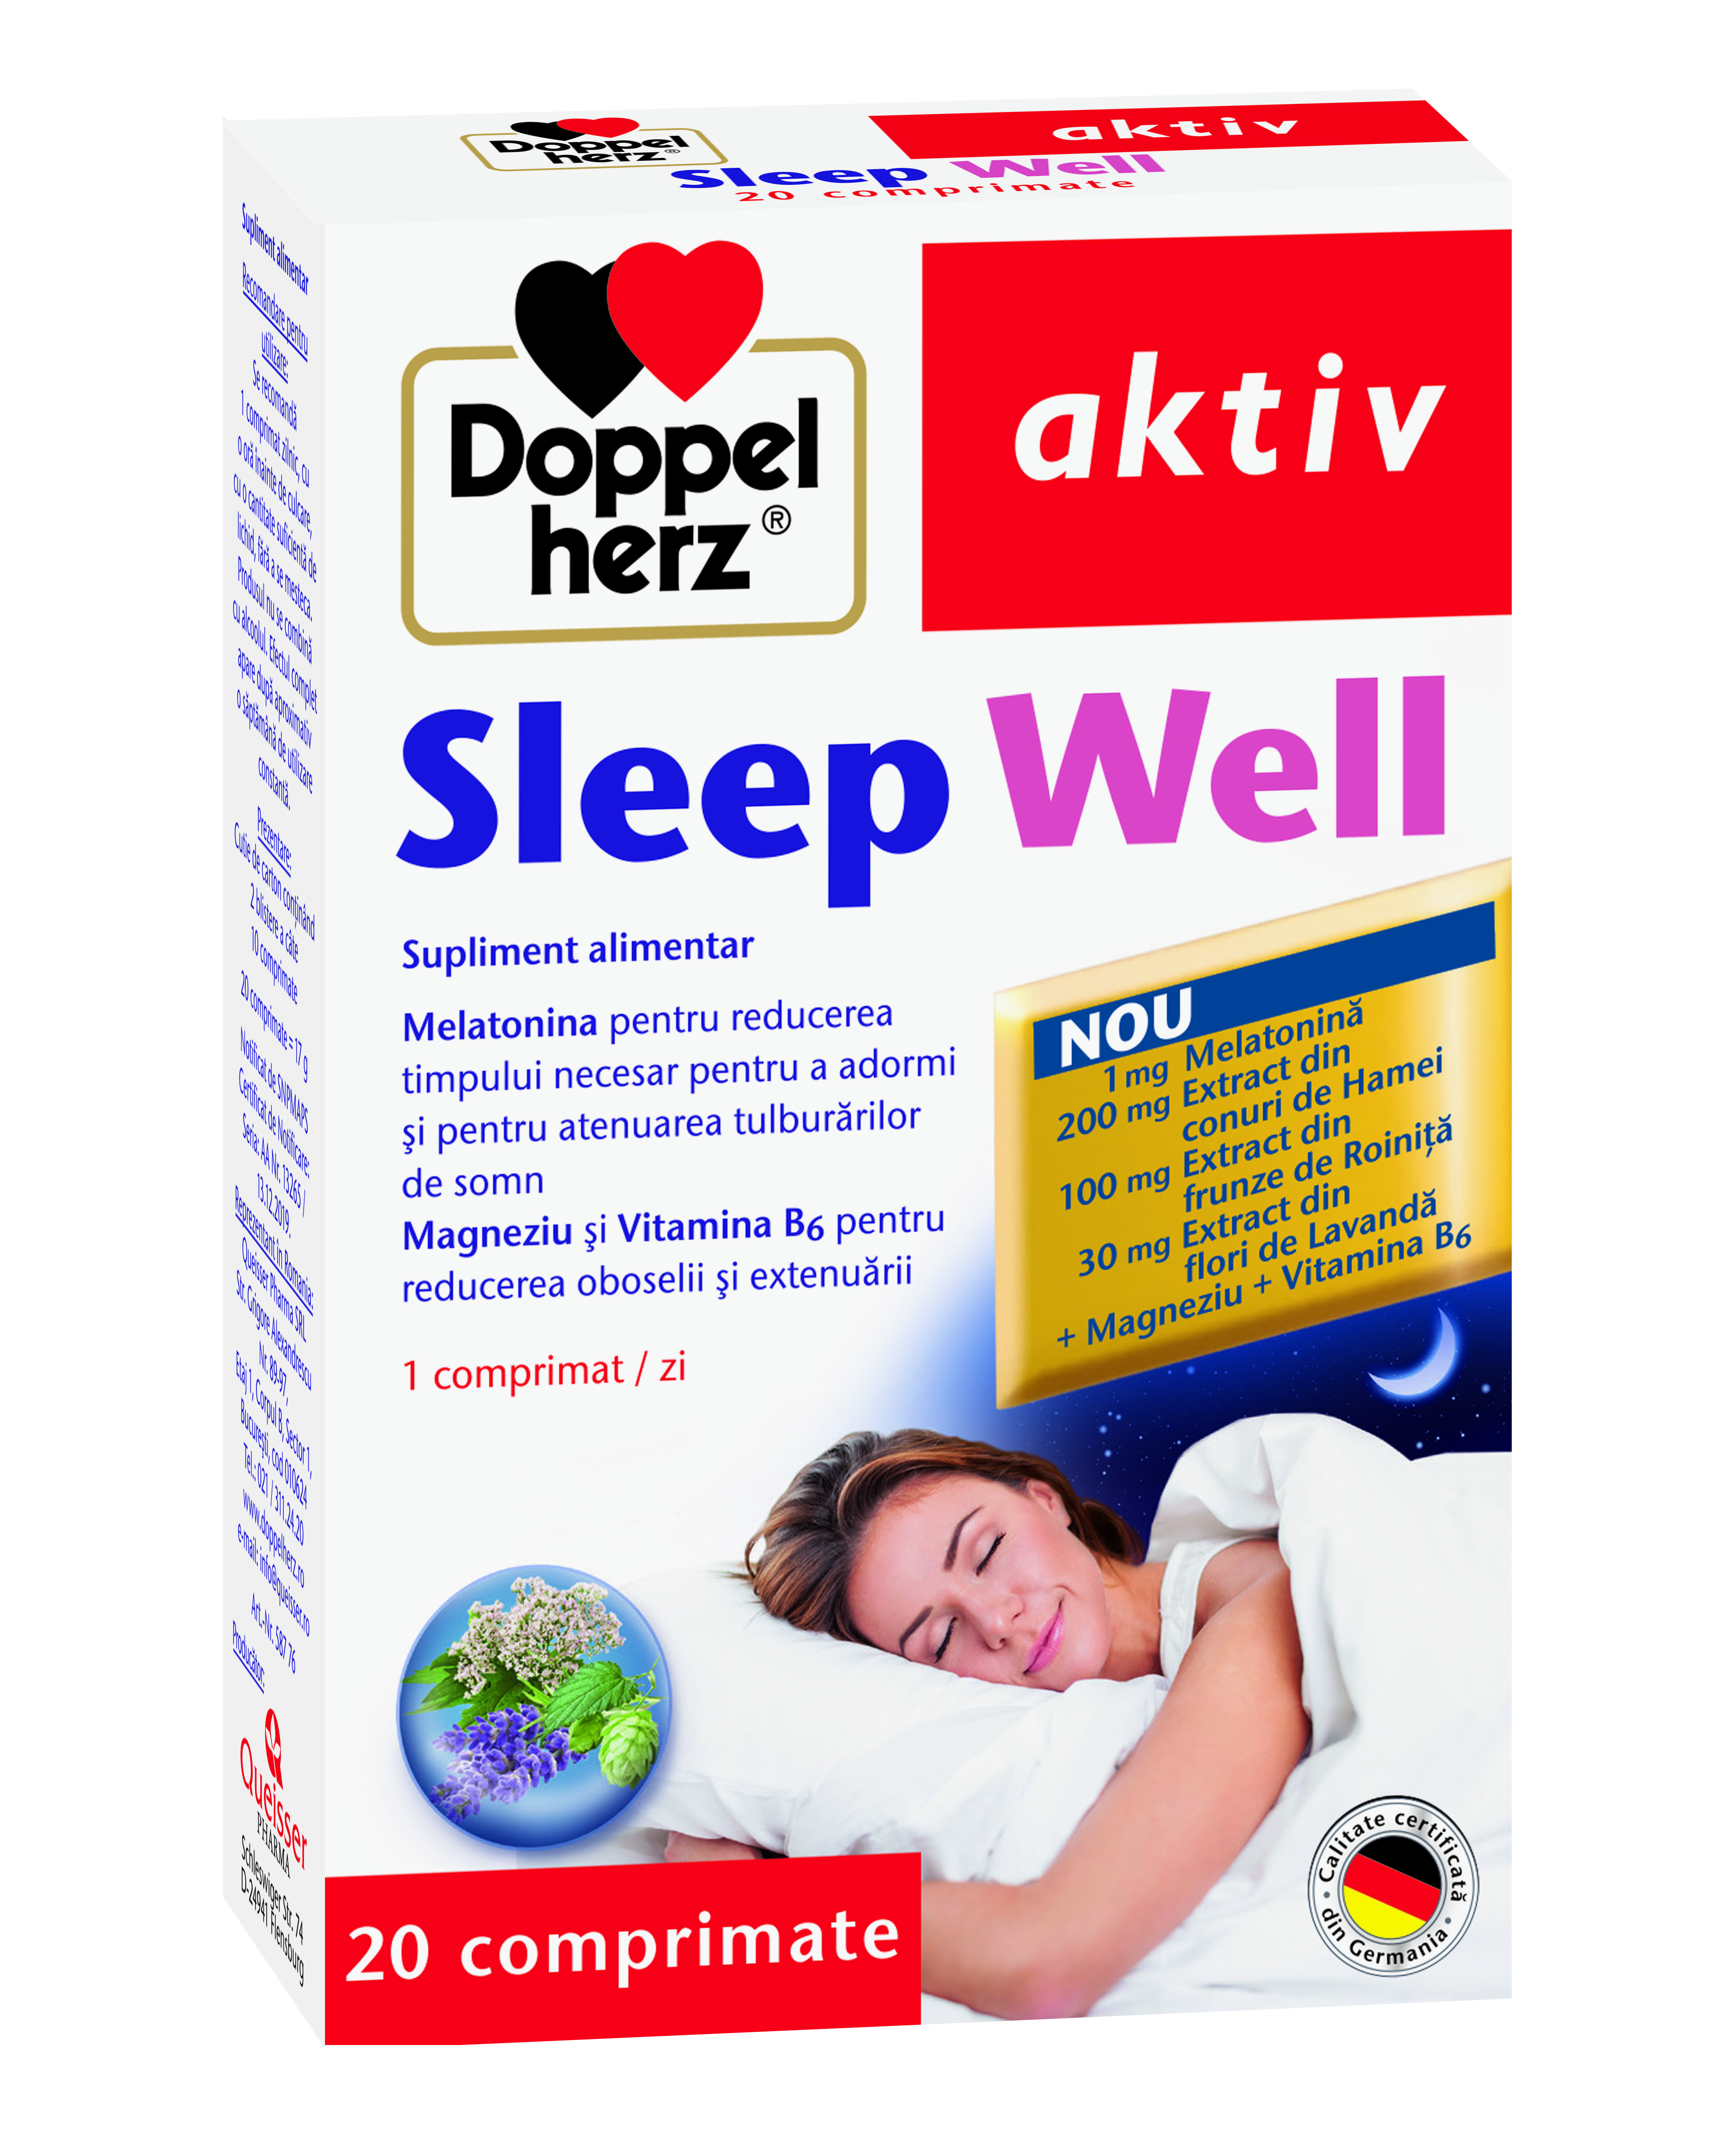 Sedative - Doppelherz Aktiv Sleep Well, 20 comprimate, sinapis.ro